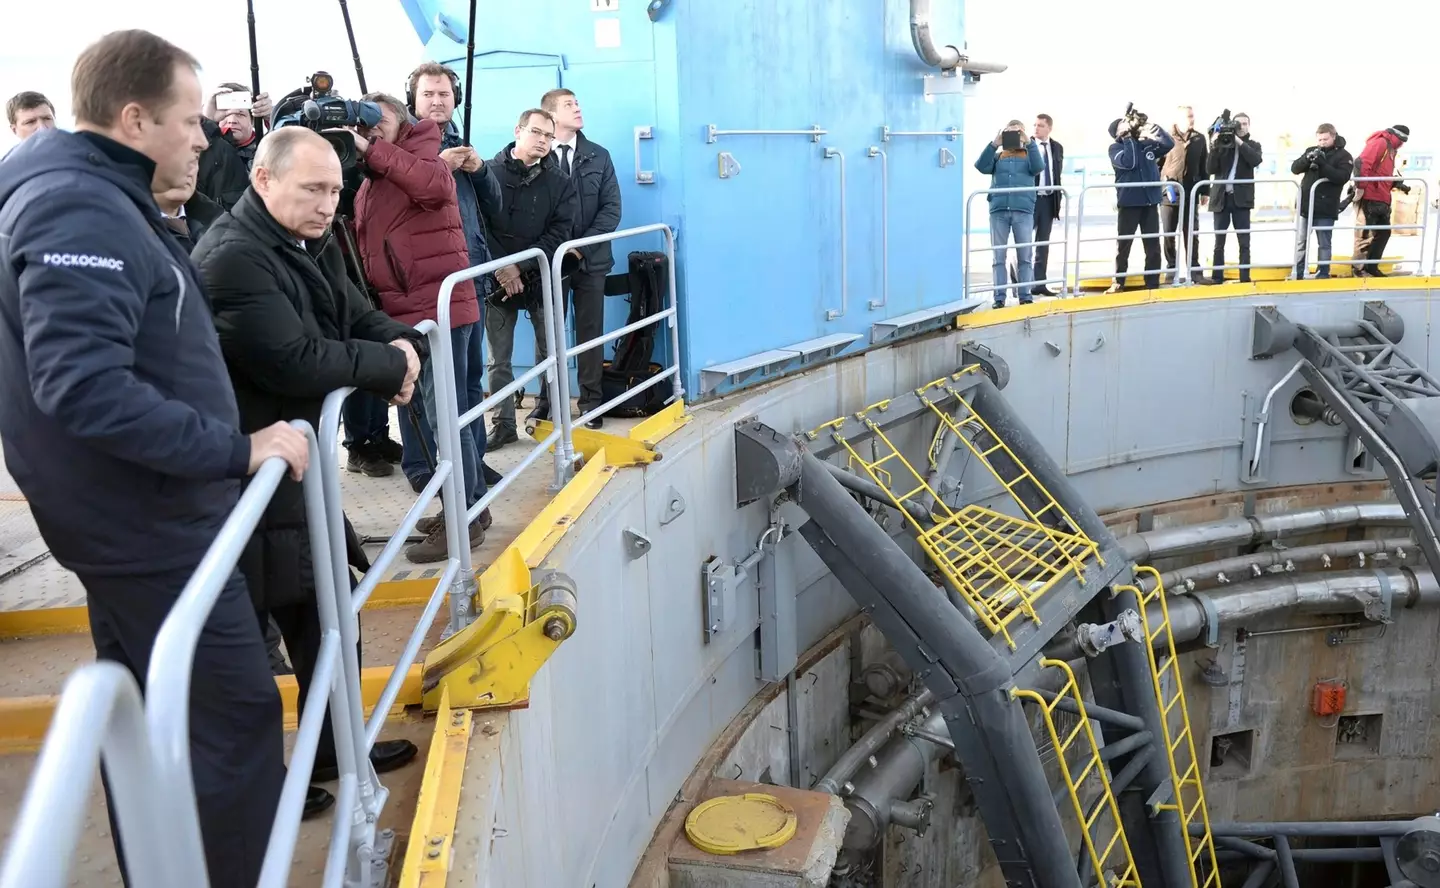 Vladimir Putin at the Vostochny Cosmodrome in 2015.